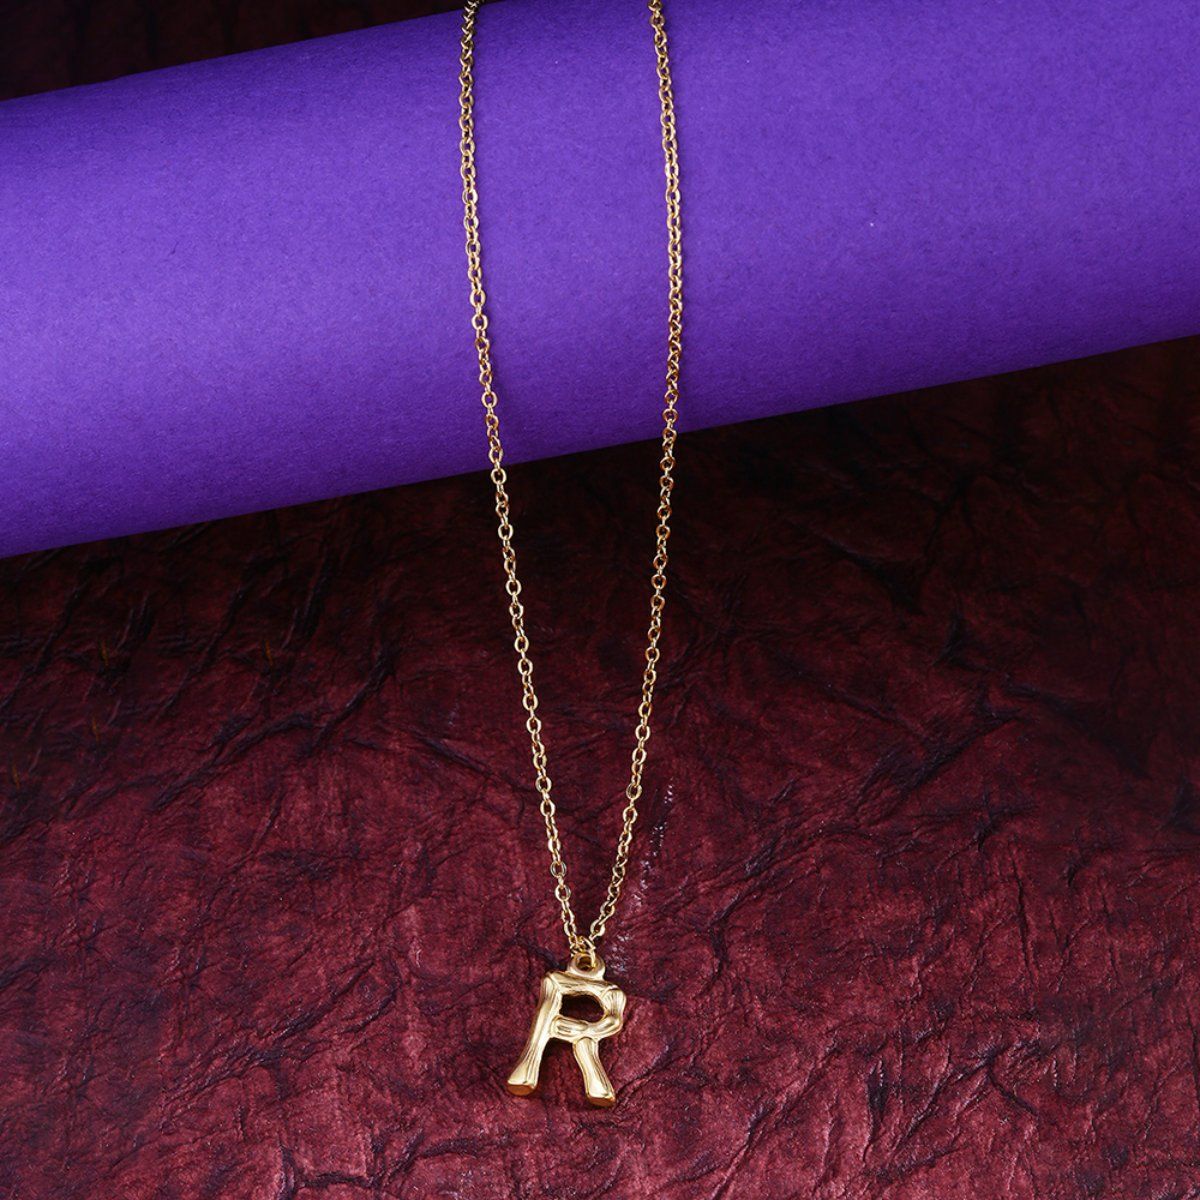 R Letter Pendant in 22ct Gold | Purejewels.com